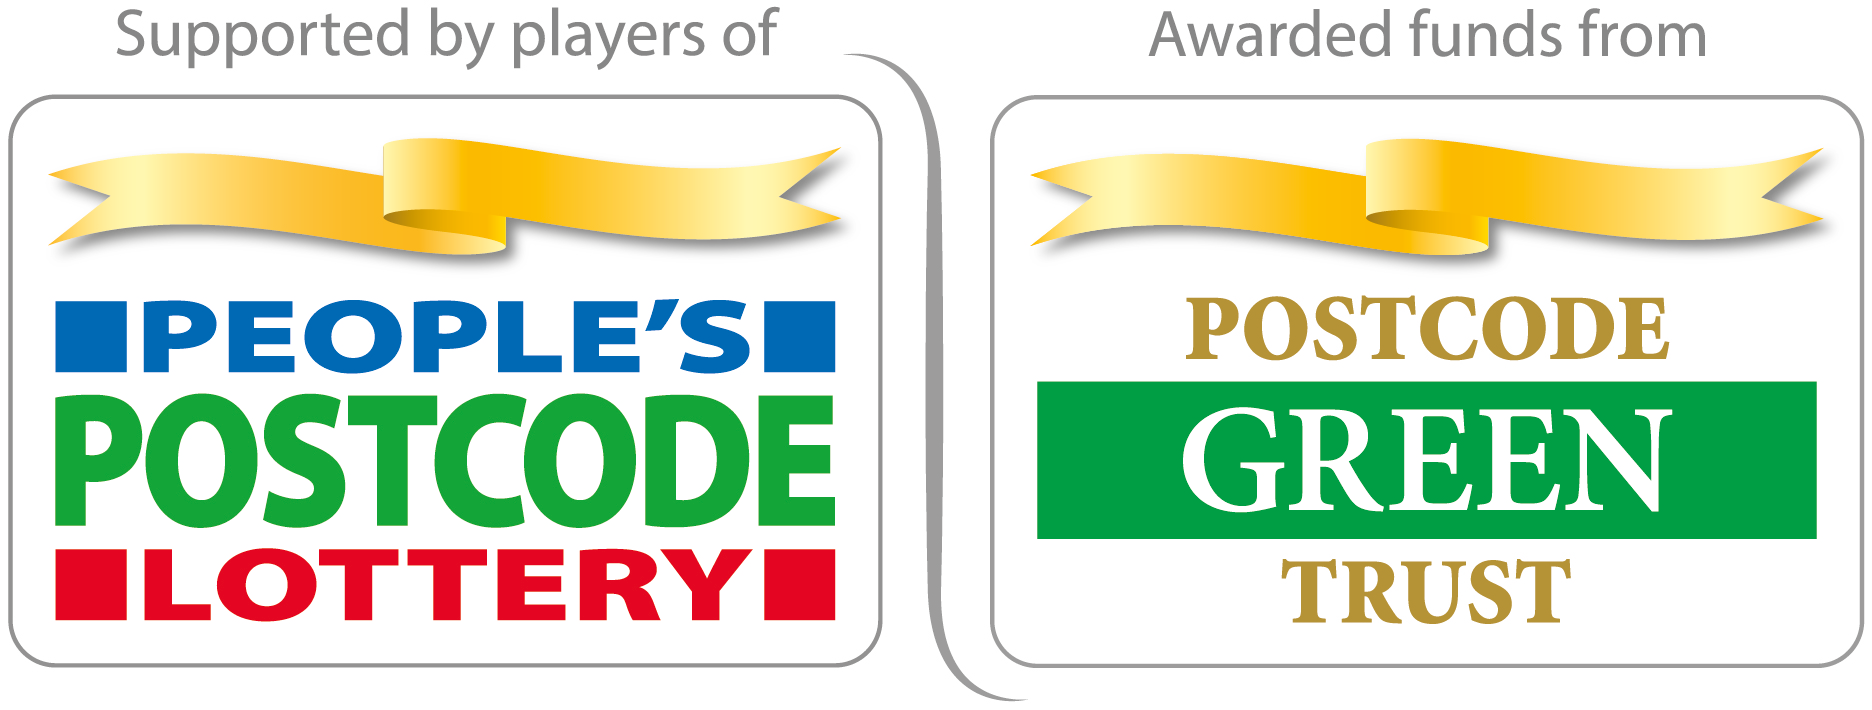 People's postcode lottery logo